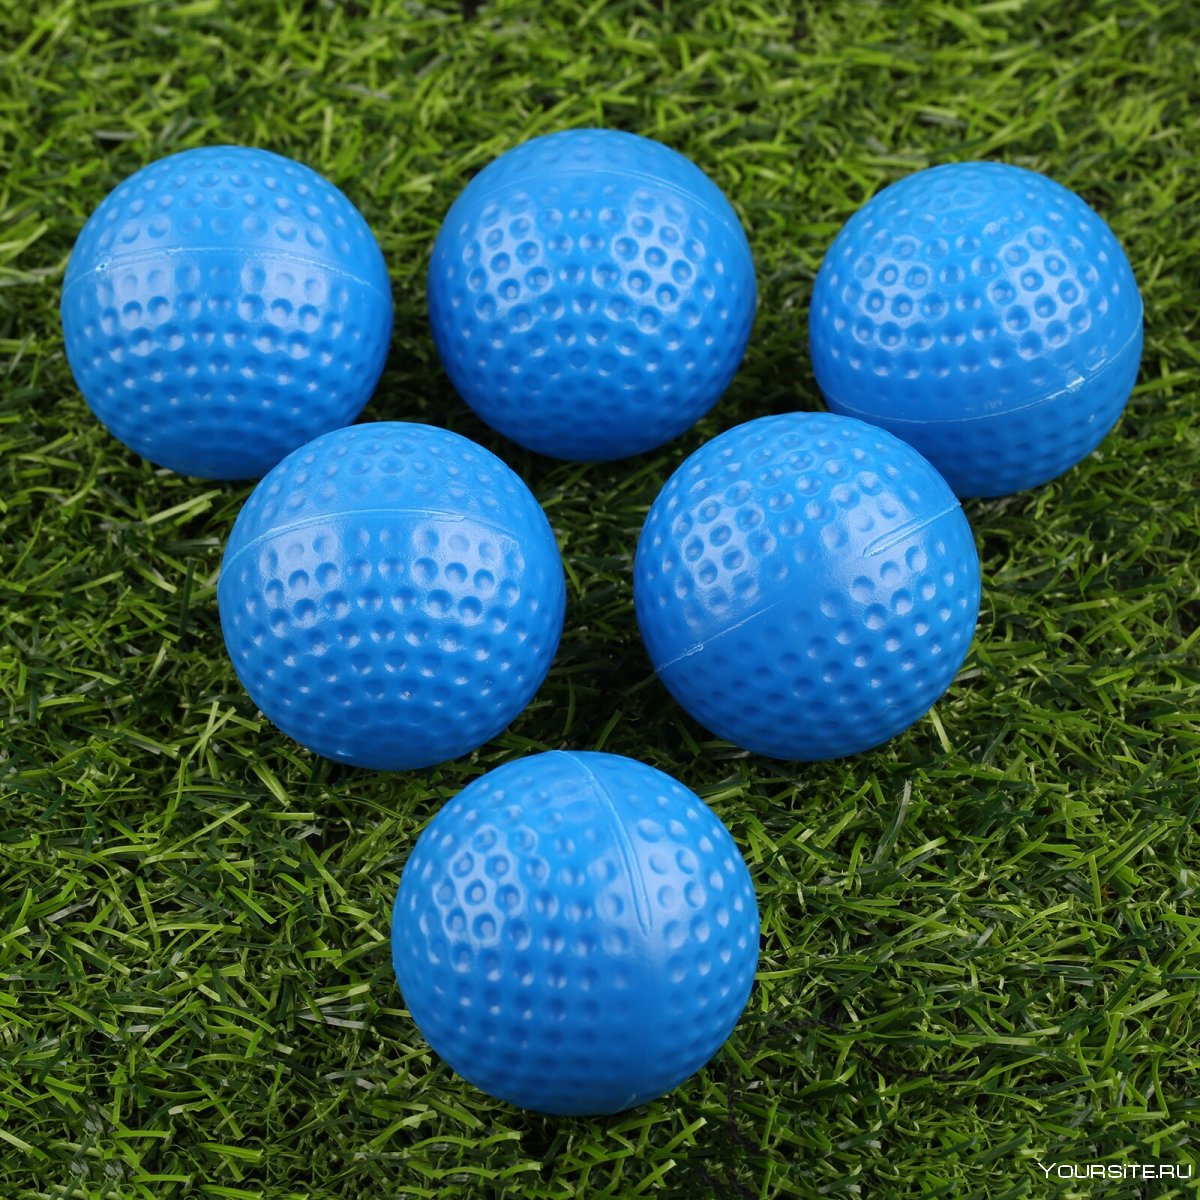 Engraved Golf balls